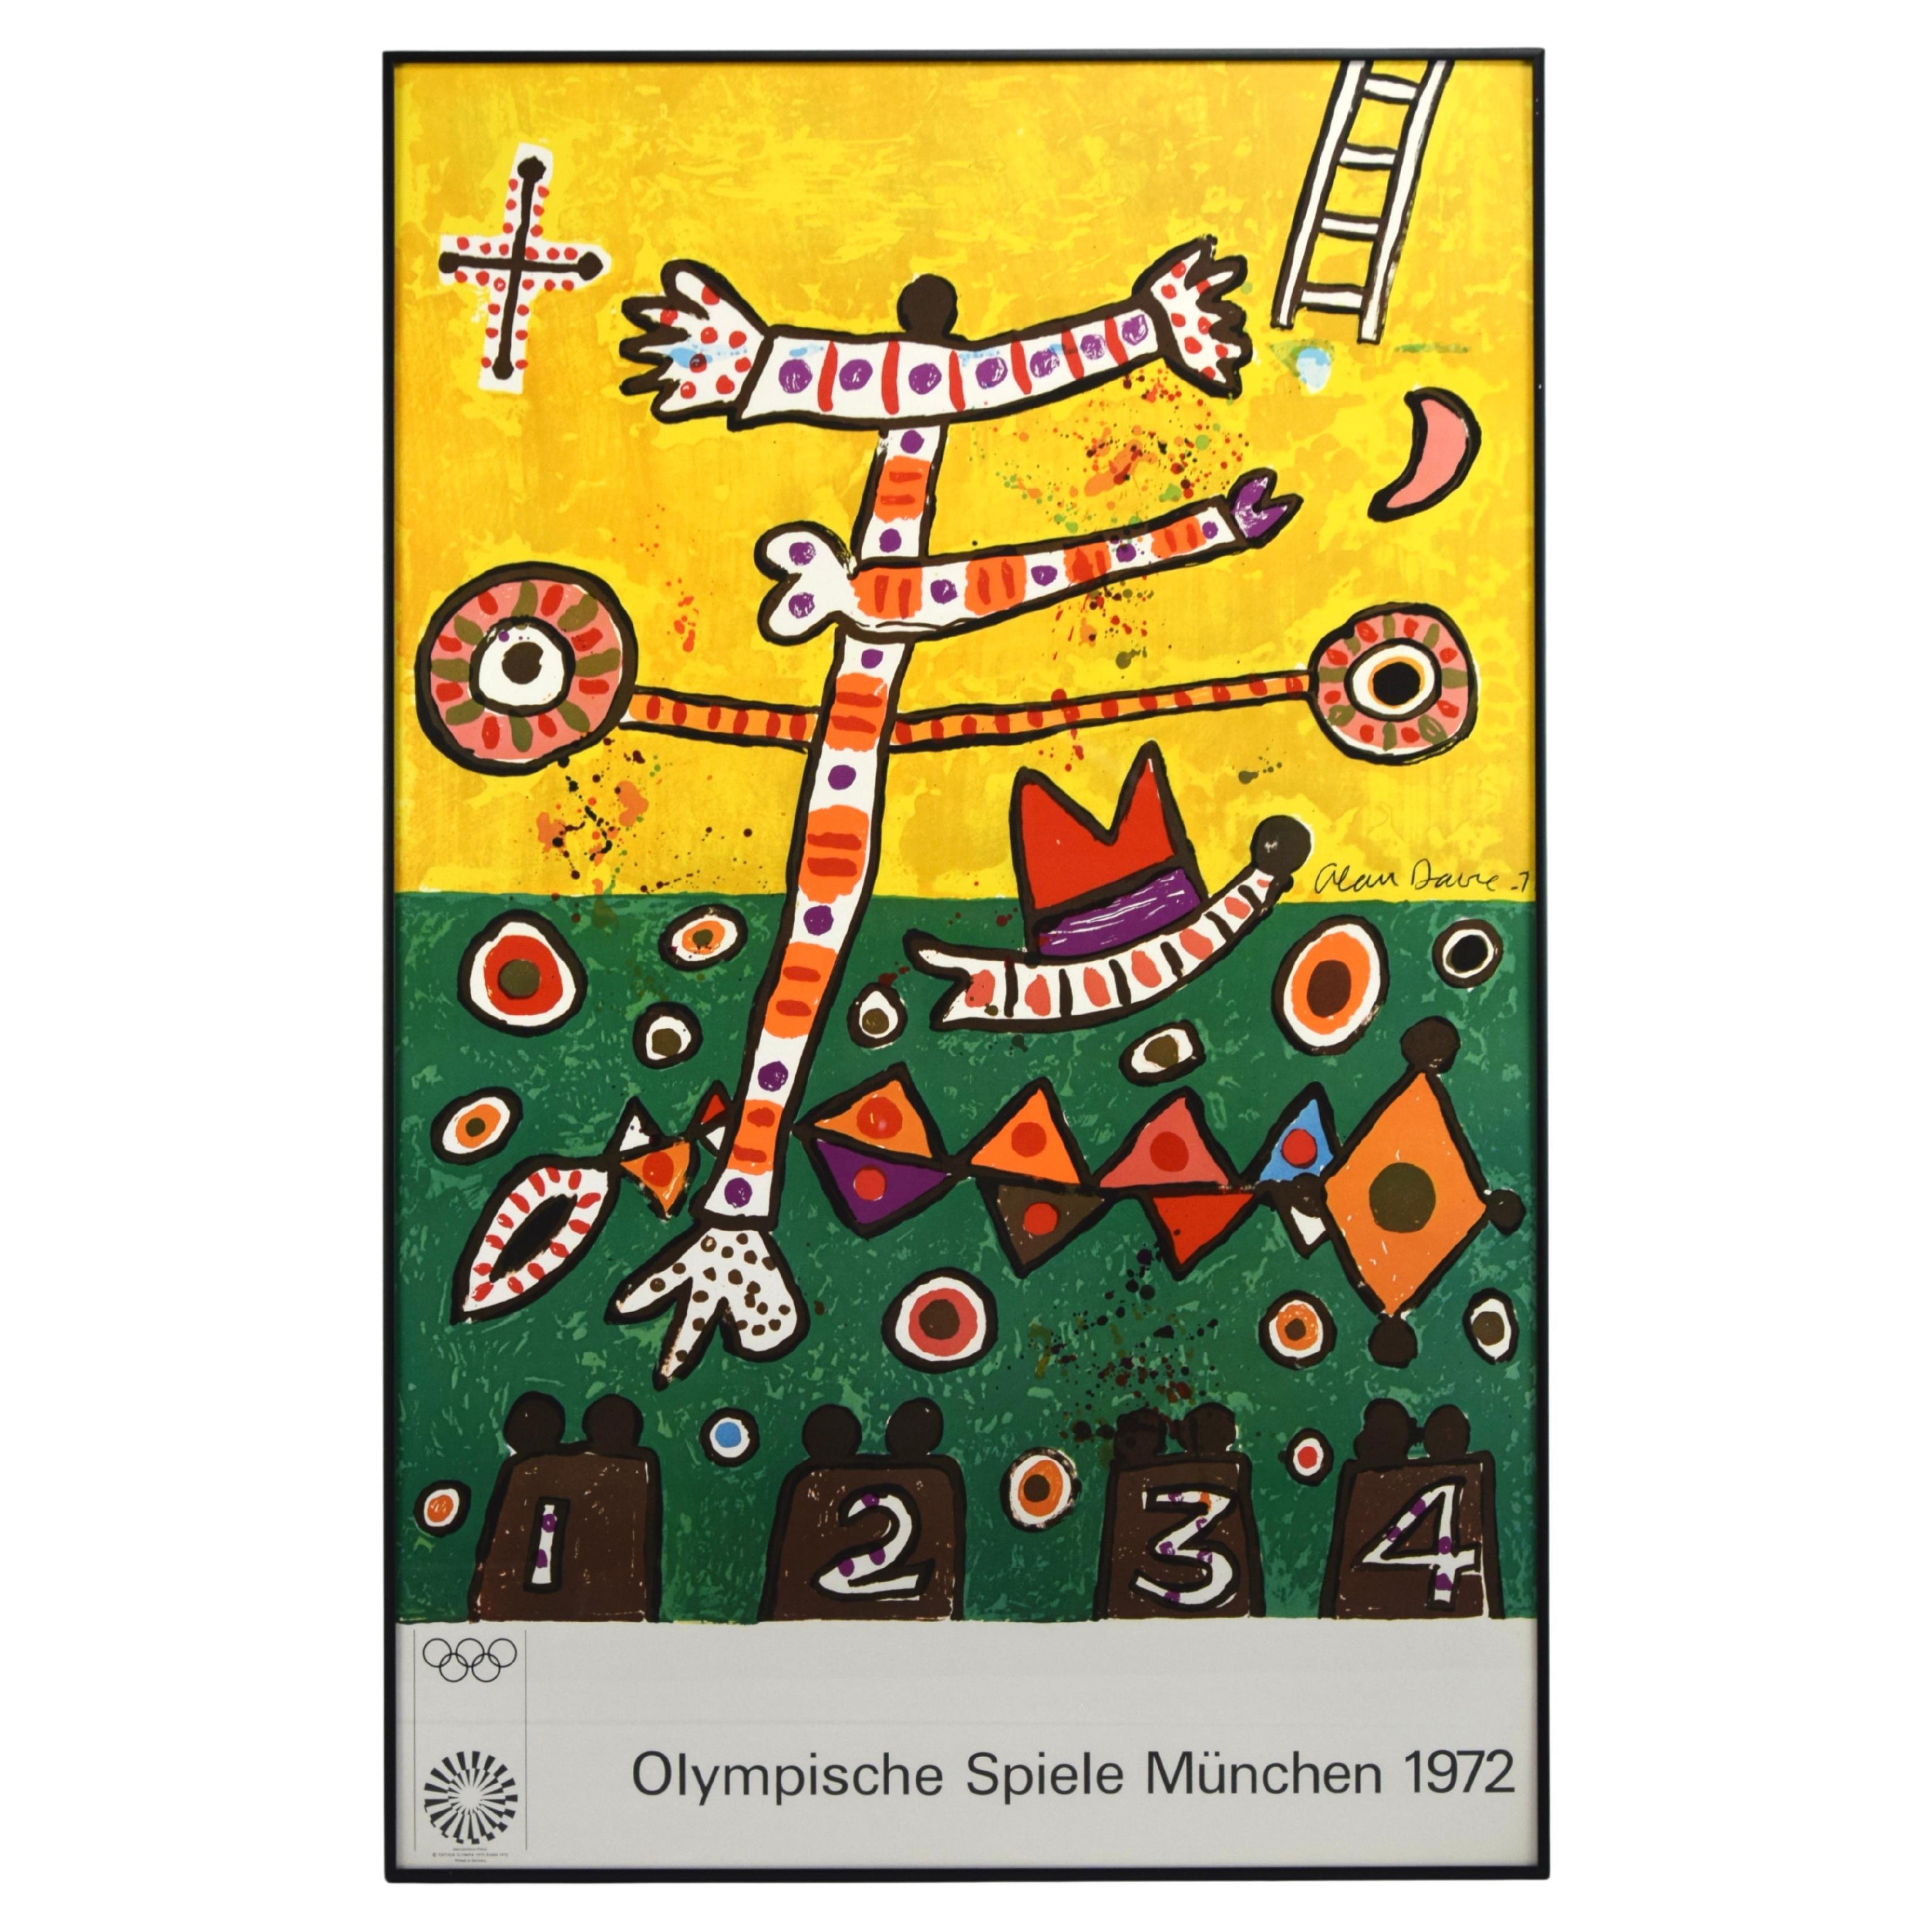 Original 1972 Munich Olympic Poster by Alan Davie